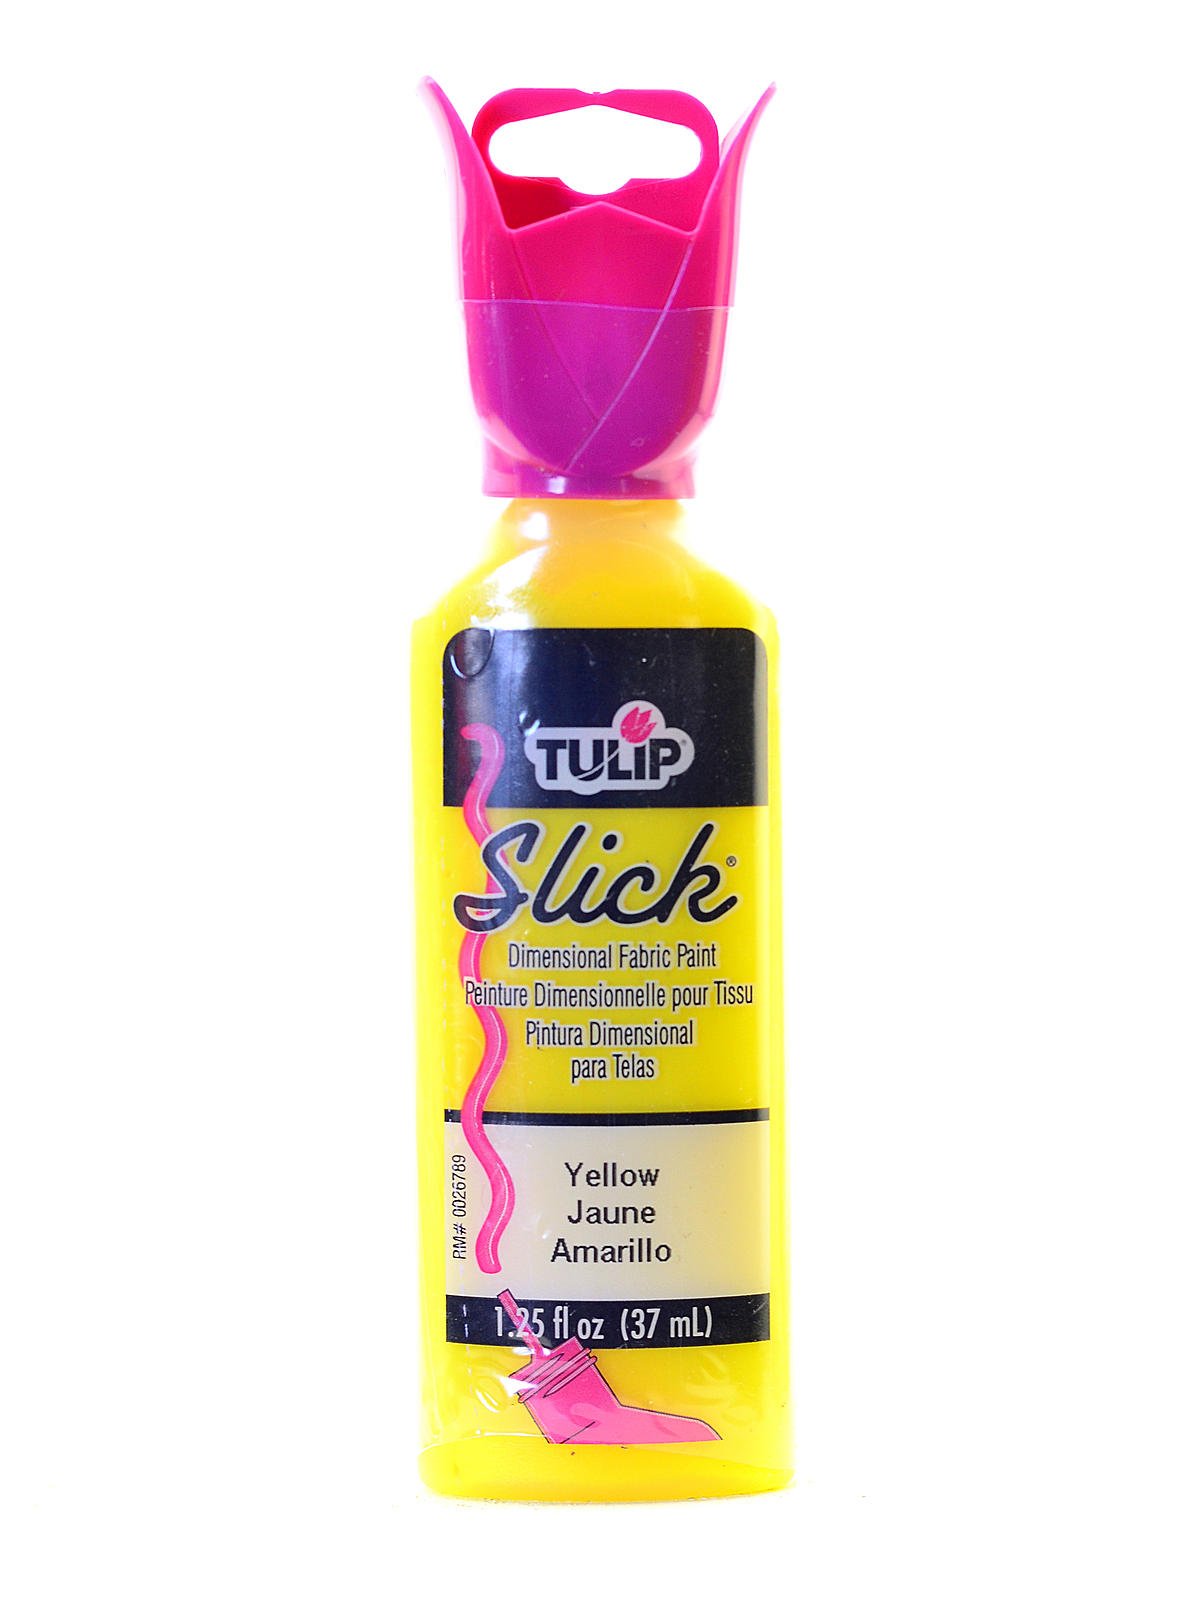 Tulip Slick Dimensional Fabric Paint, Deep Red - 4 fl oz bottle